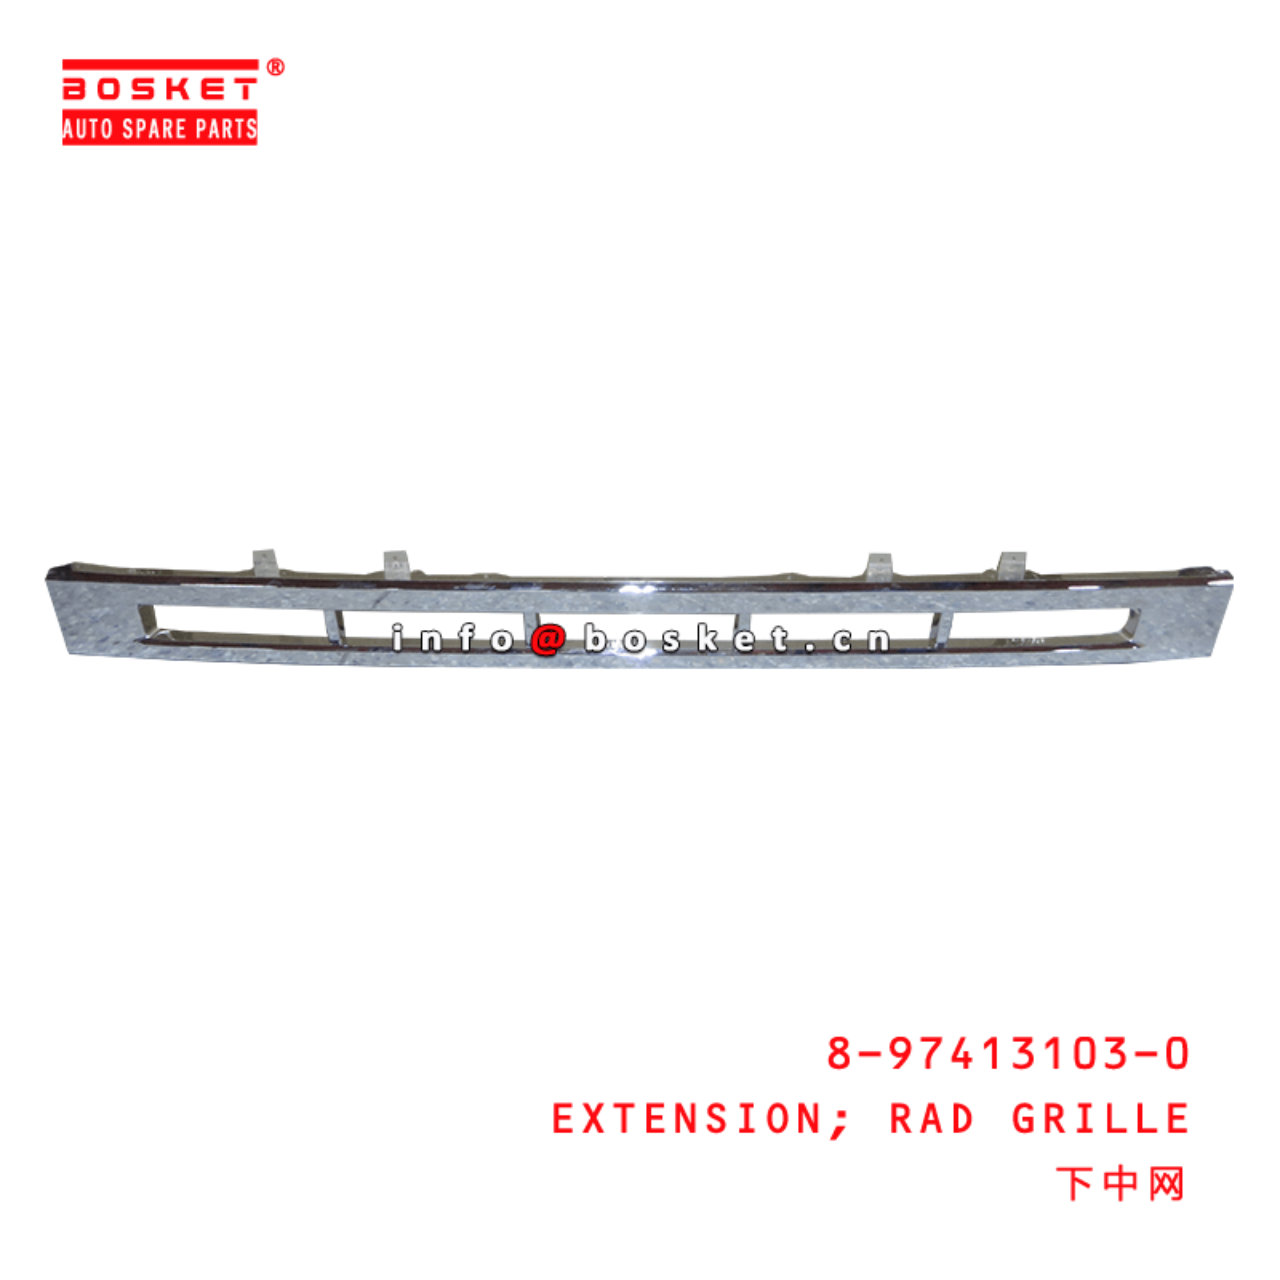  8-97413103-0 Rad Grille Extension 8974131030 Suitable for ISUZU GXR 